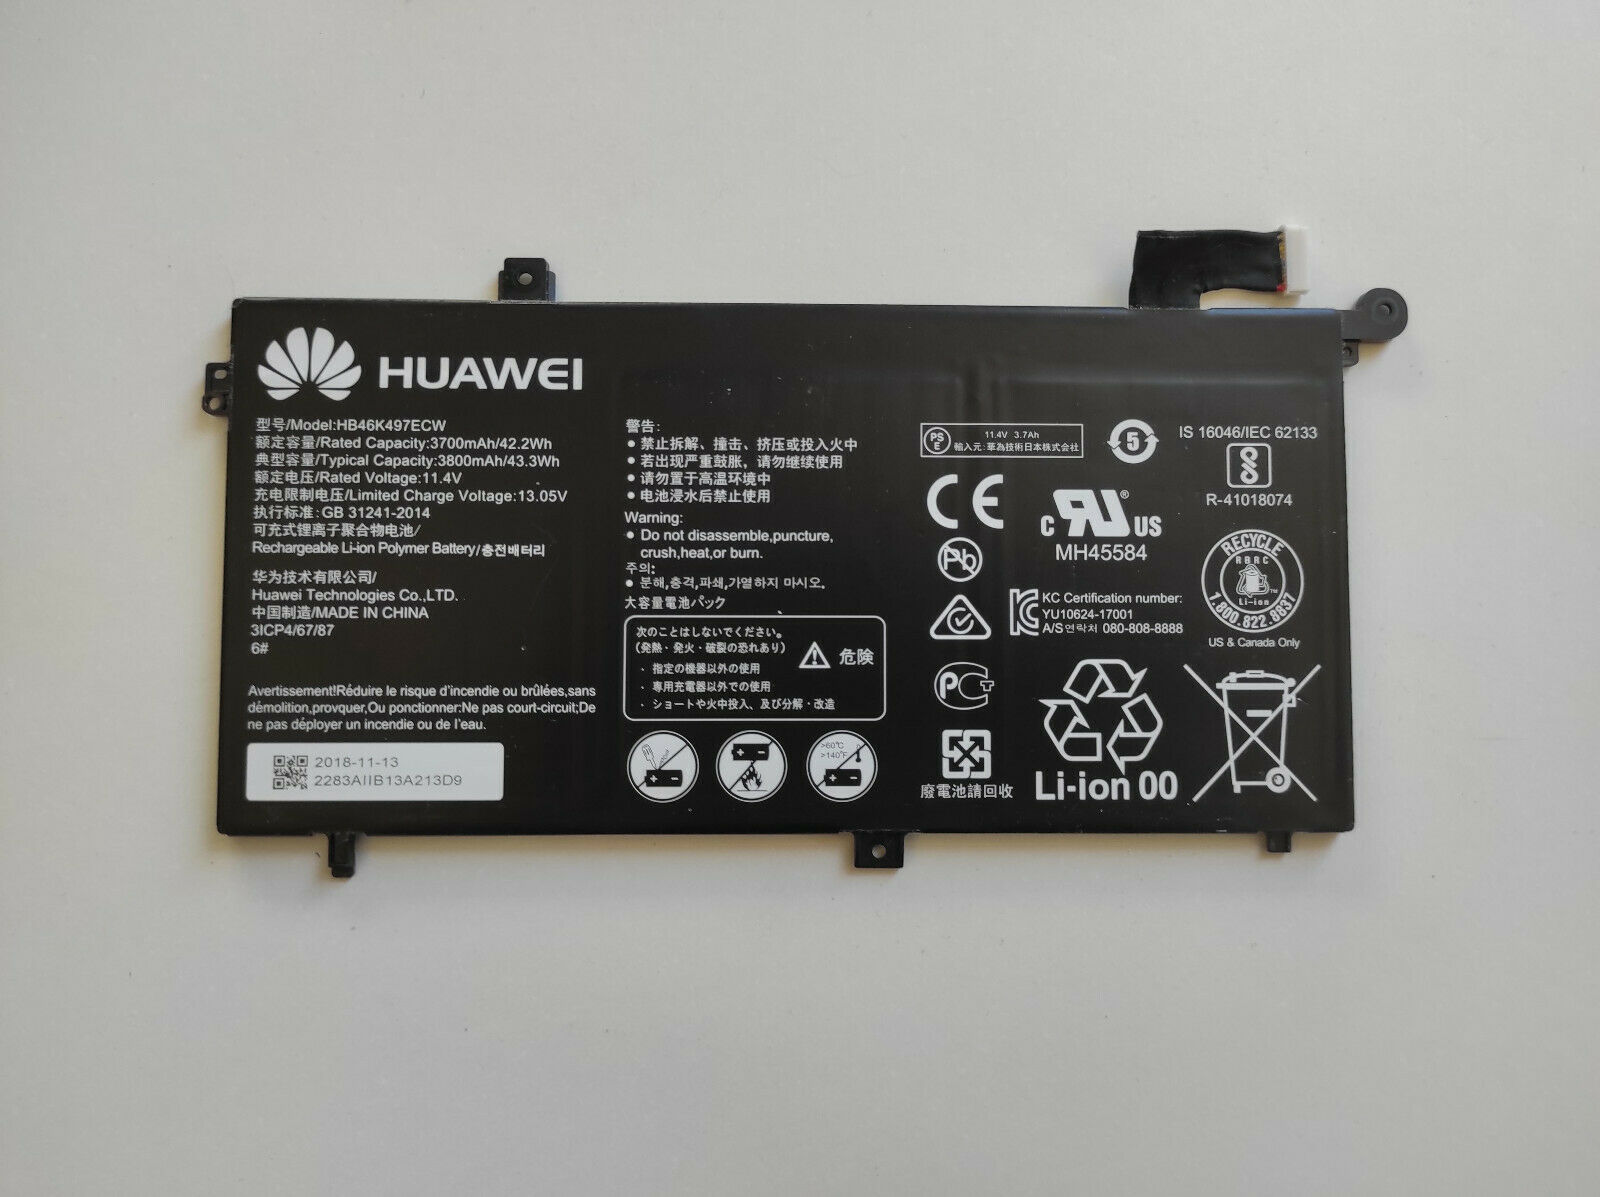 42.2Wh Huawei Matebook PL-W19 Battery [US-HB46K497ECW-7]